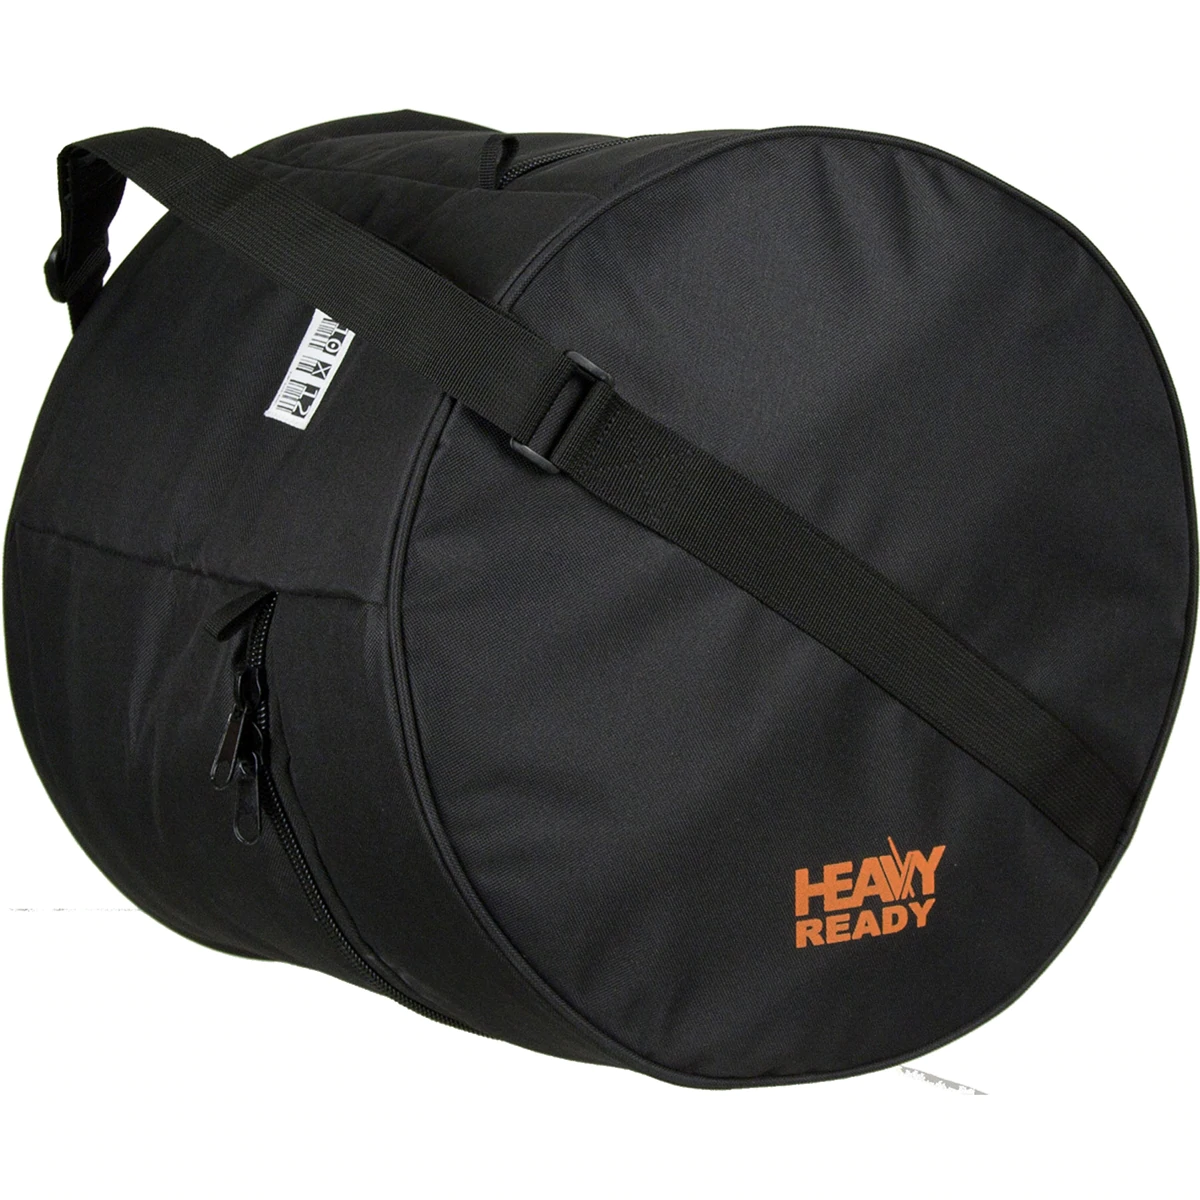 PROTEC Heavy Ready Padded Tom Bag 12x10